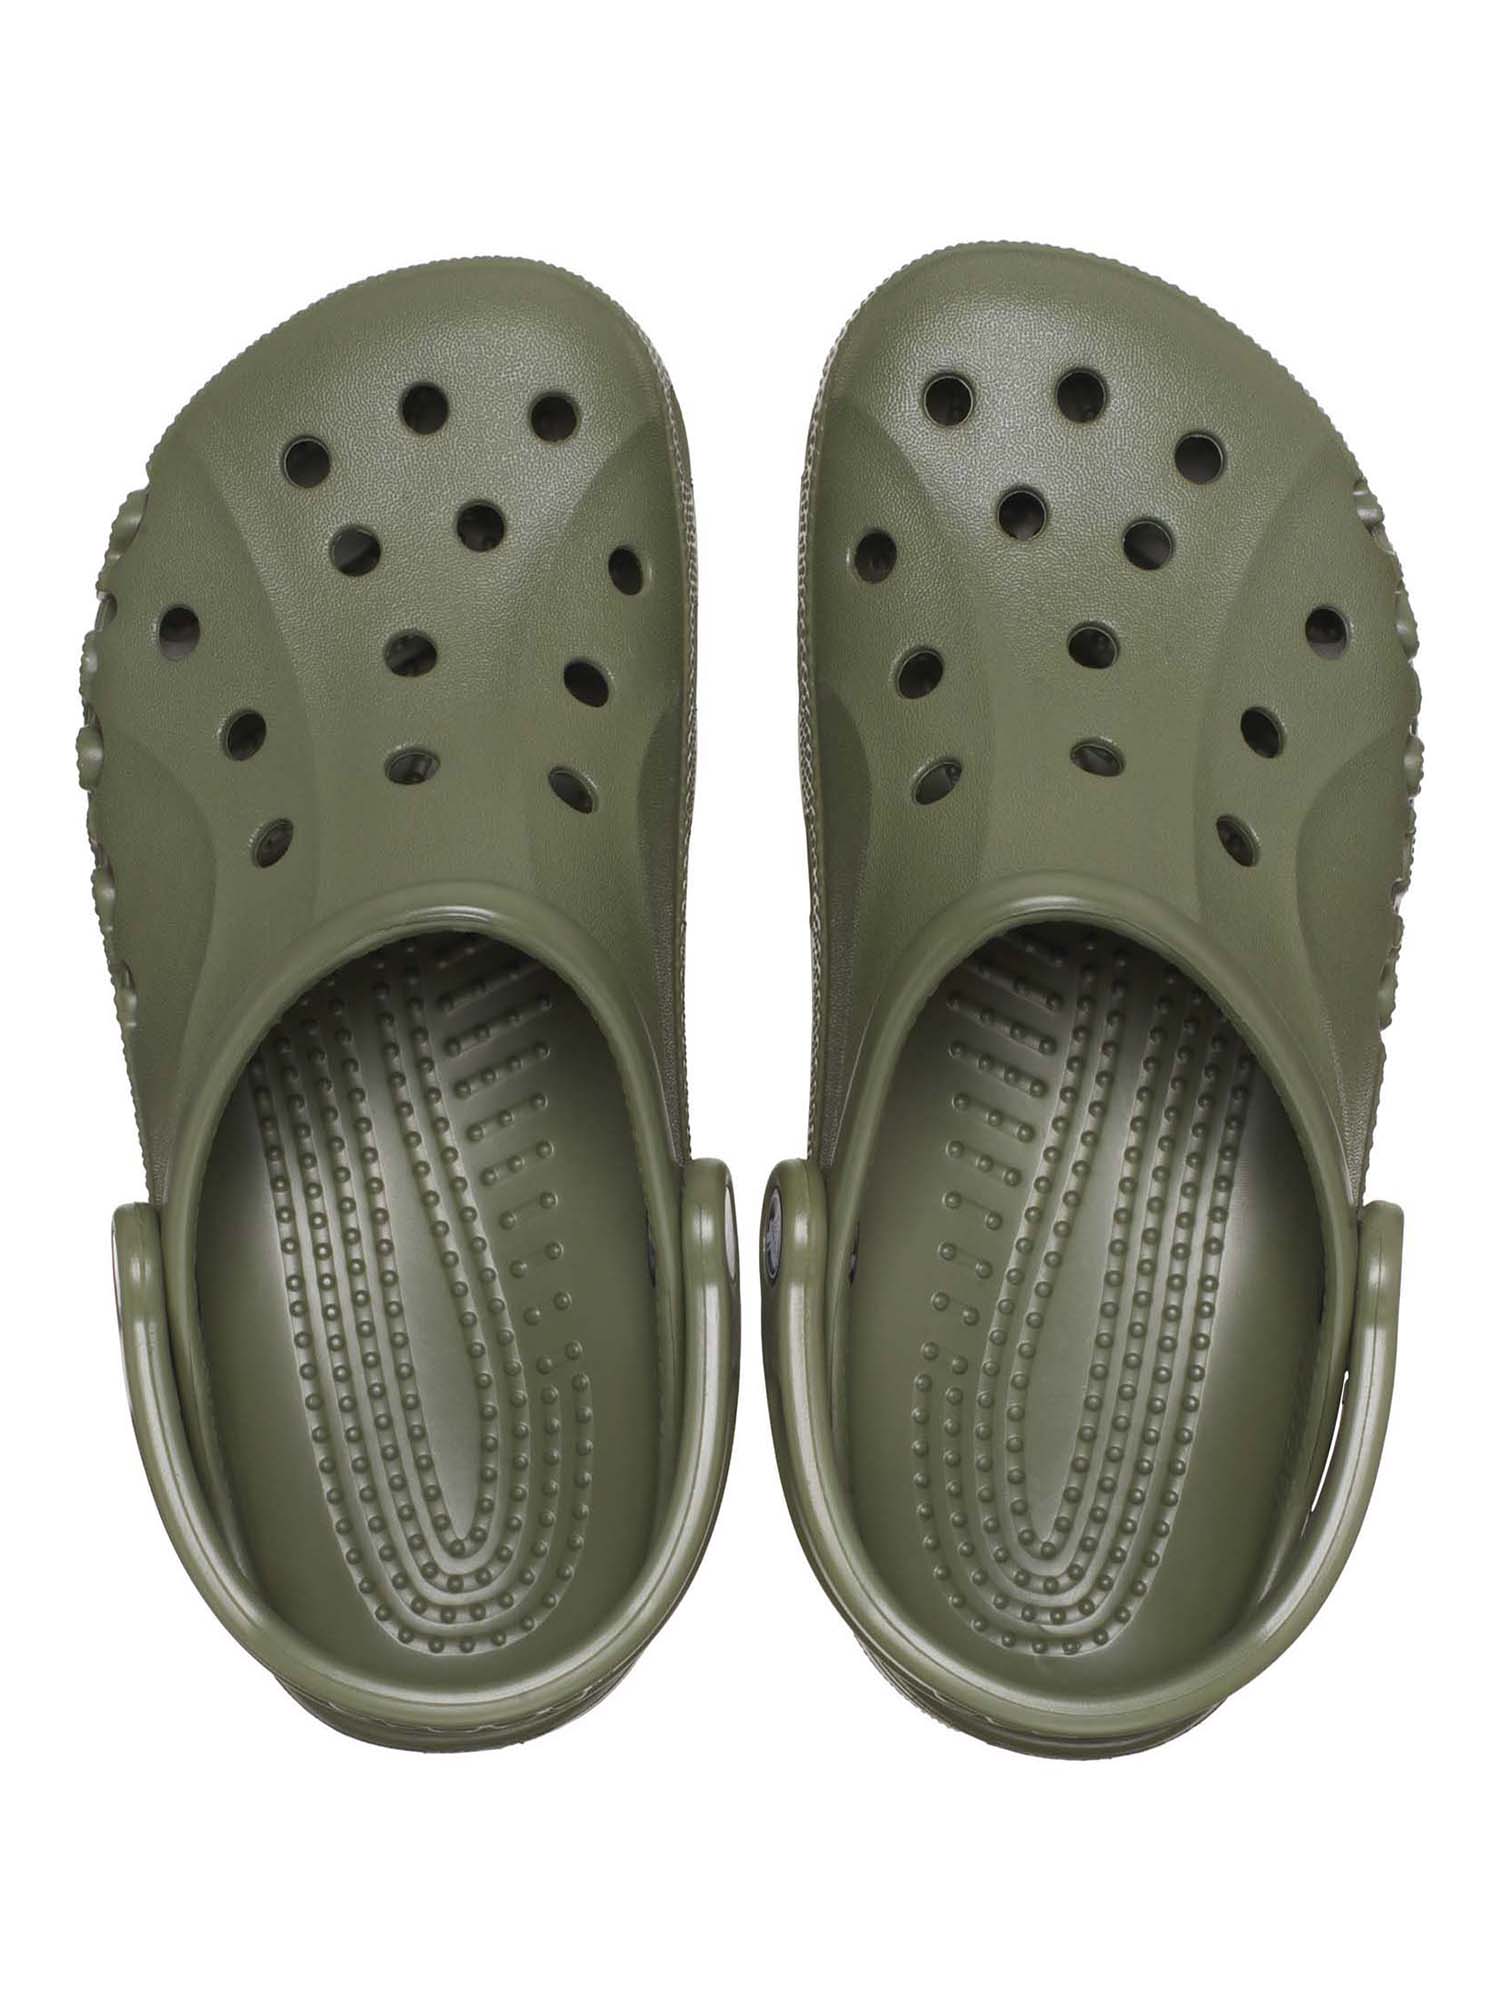 Crocs Men's and Women's Unisex Baya Clog Sandals - image 5 of 7